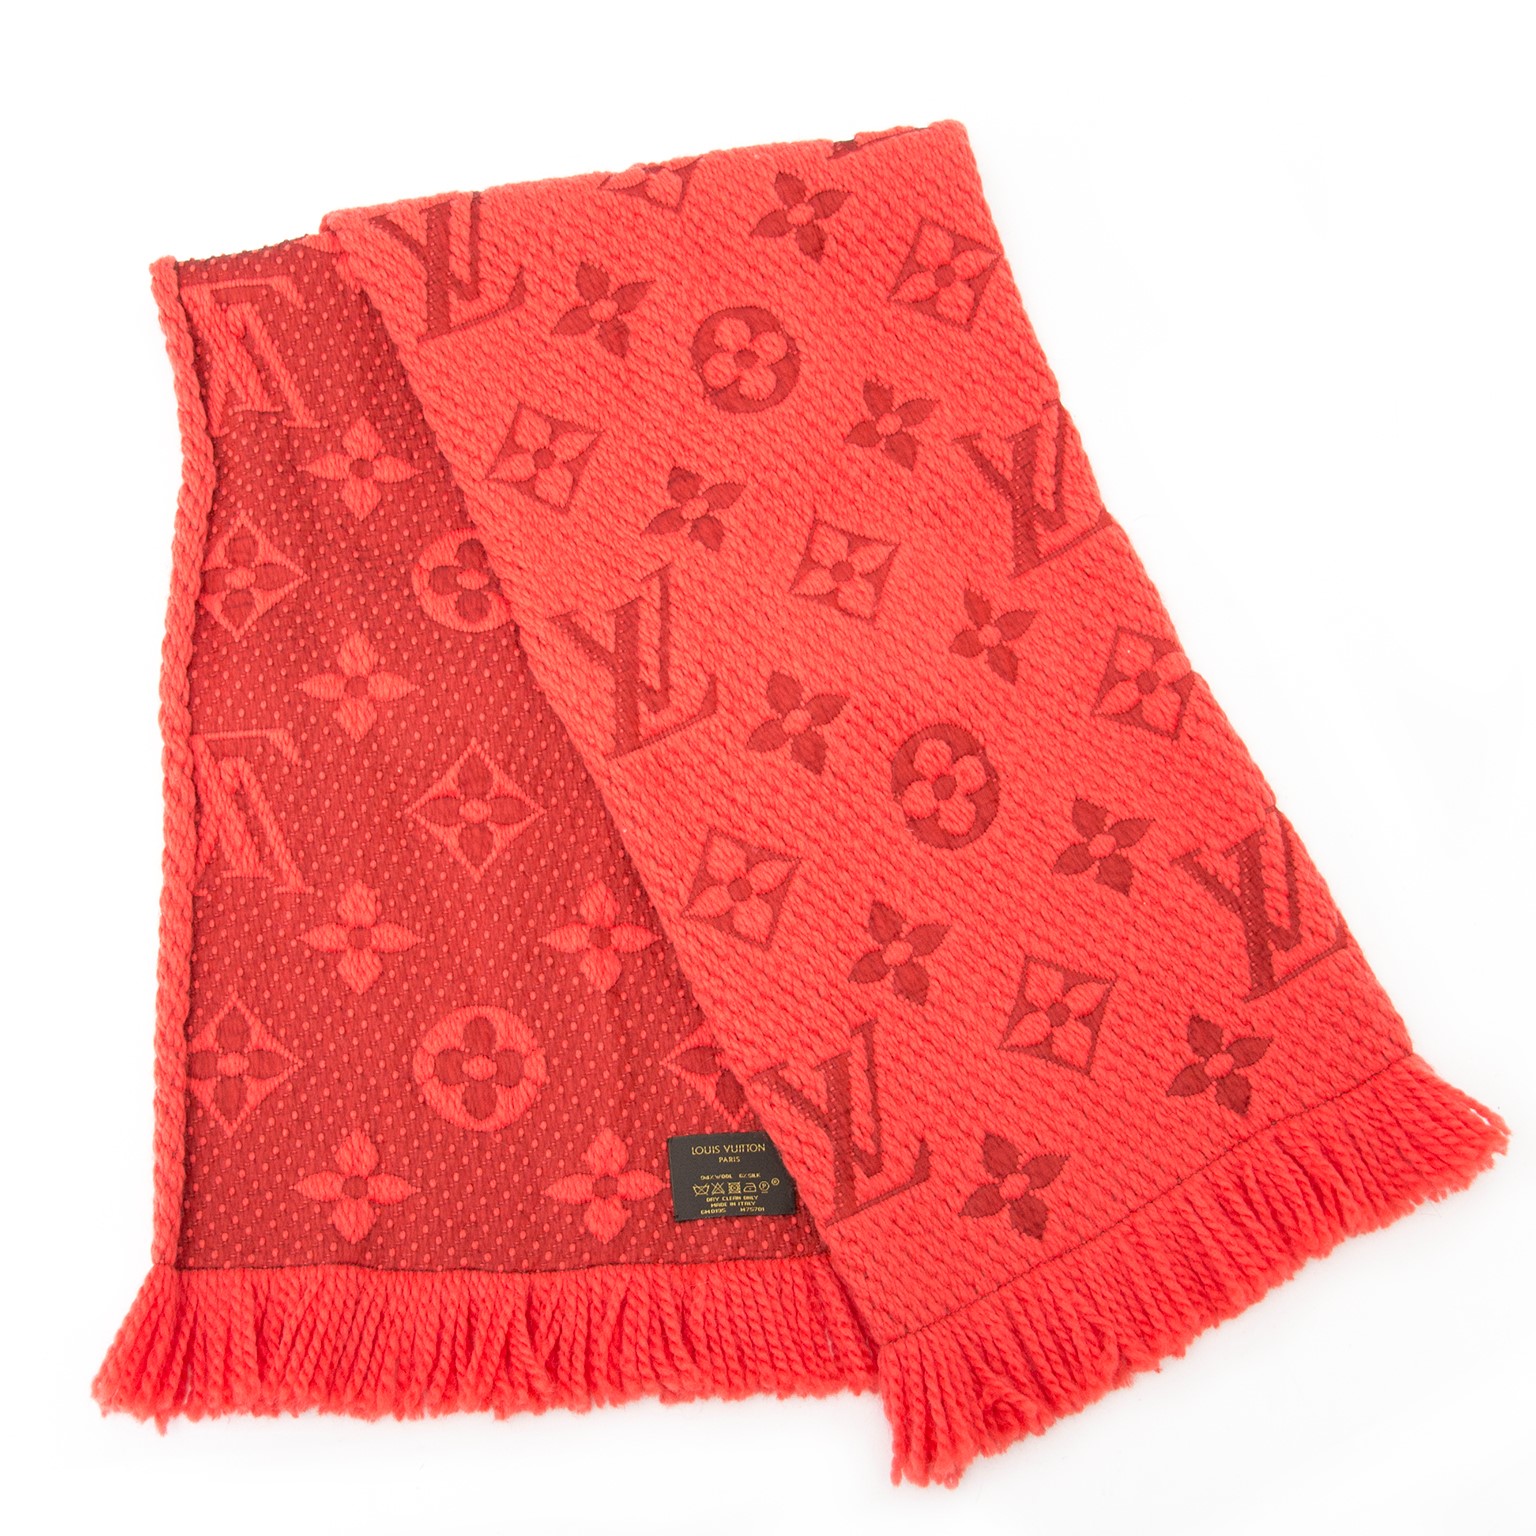 Louis Logomania scarf.. $450 #Aesthetic #Scarves #designerresale #bost